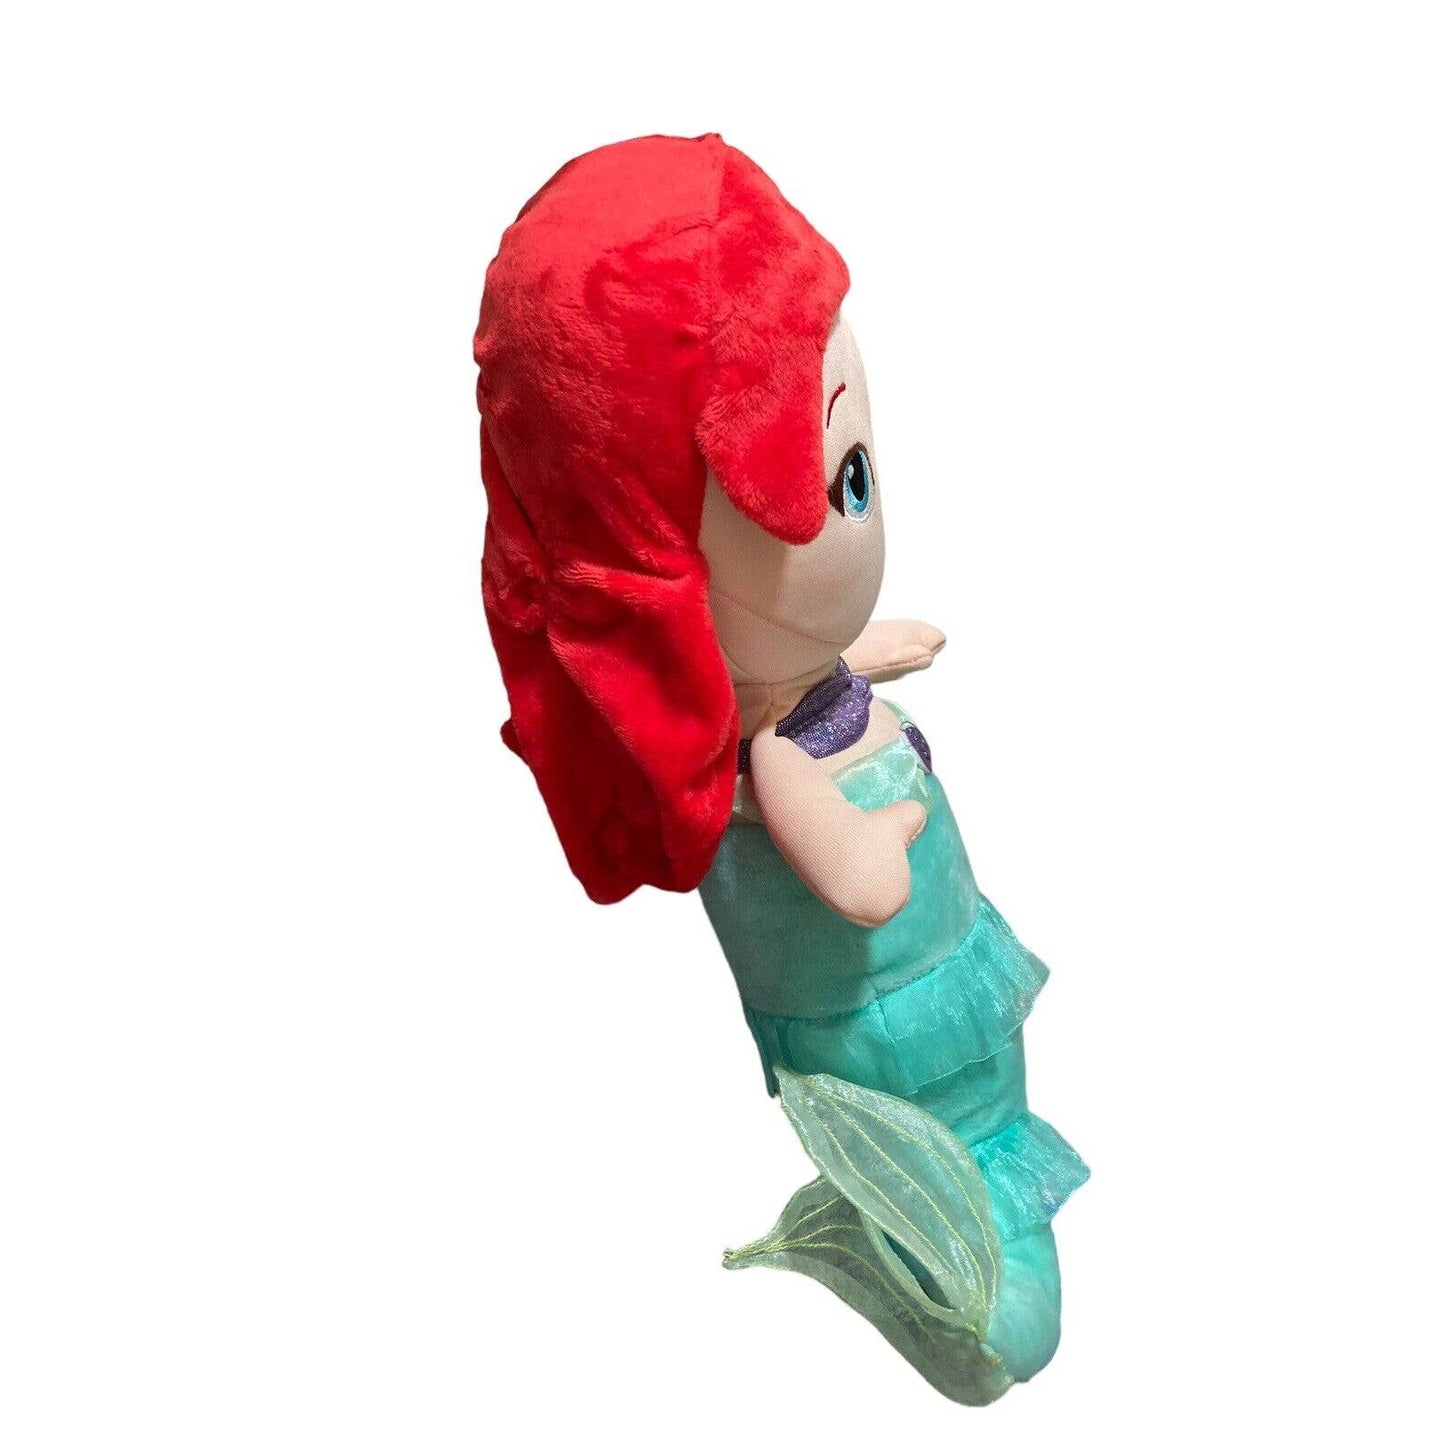 Kids Preferred Disney Baby The Little Mermaid Ariel Plush Doll Toy 0 Months Up